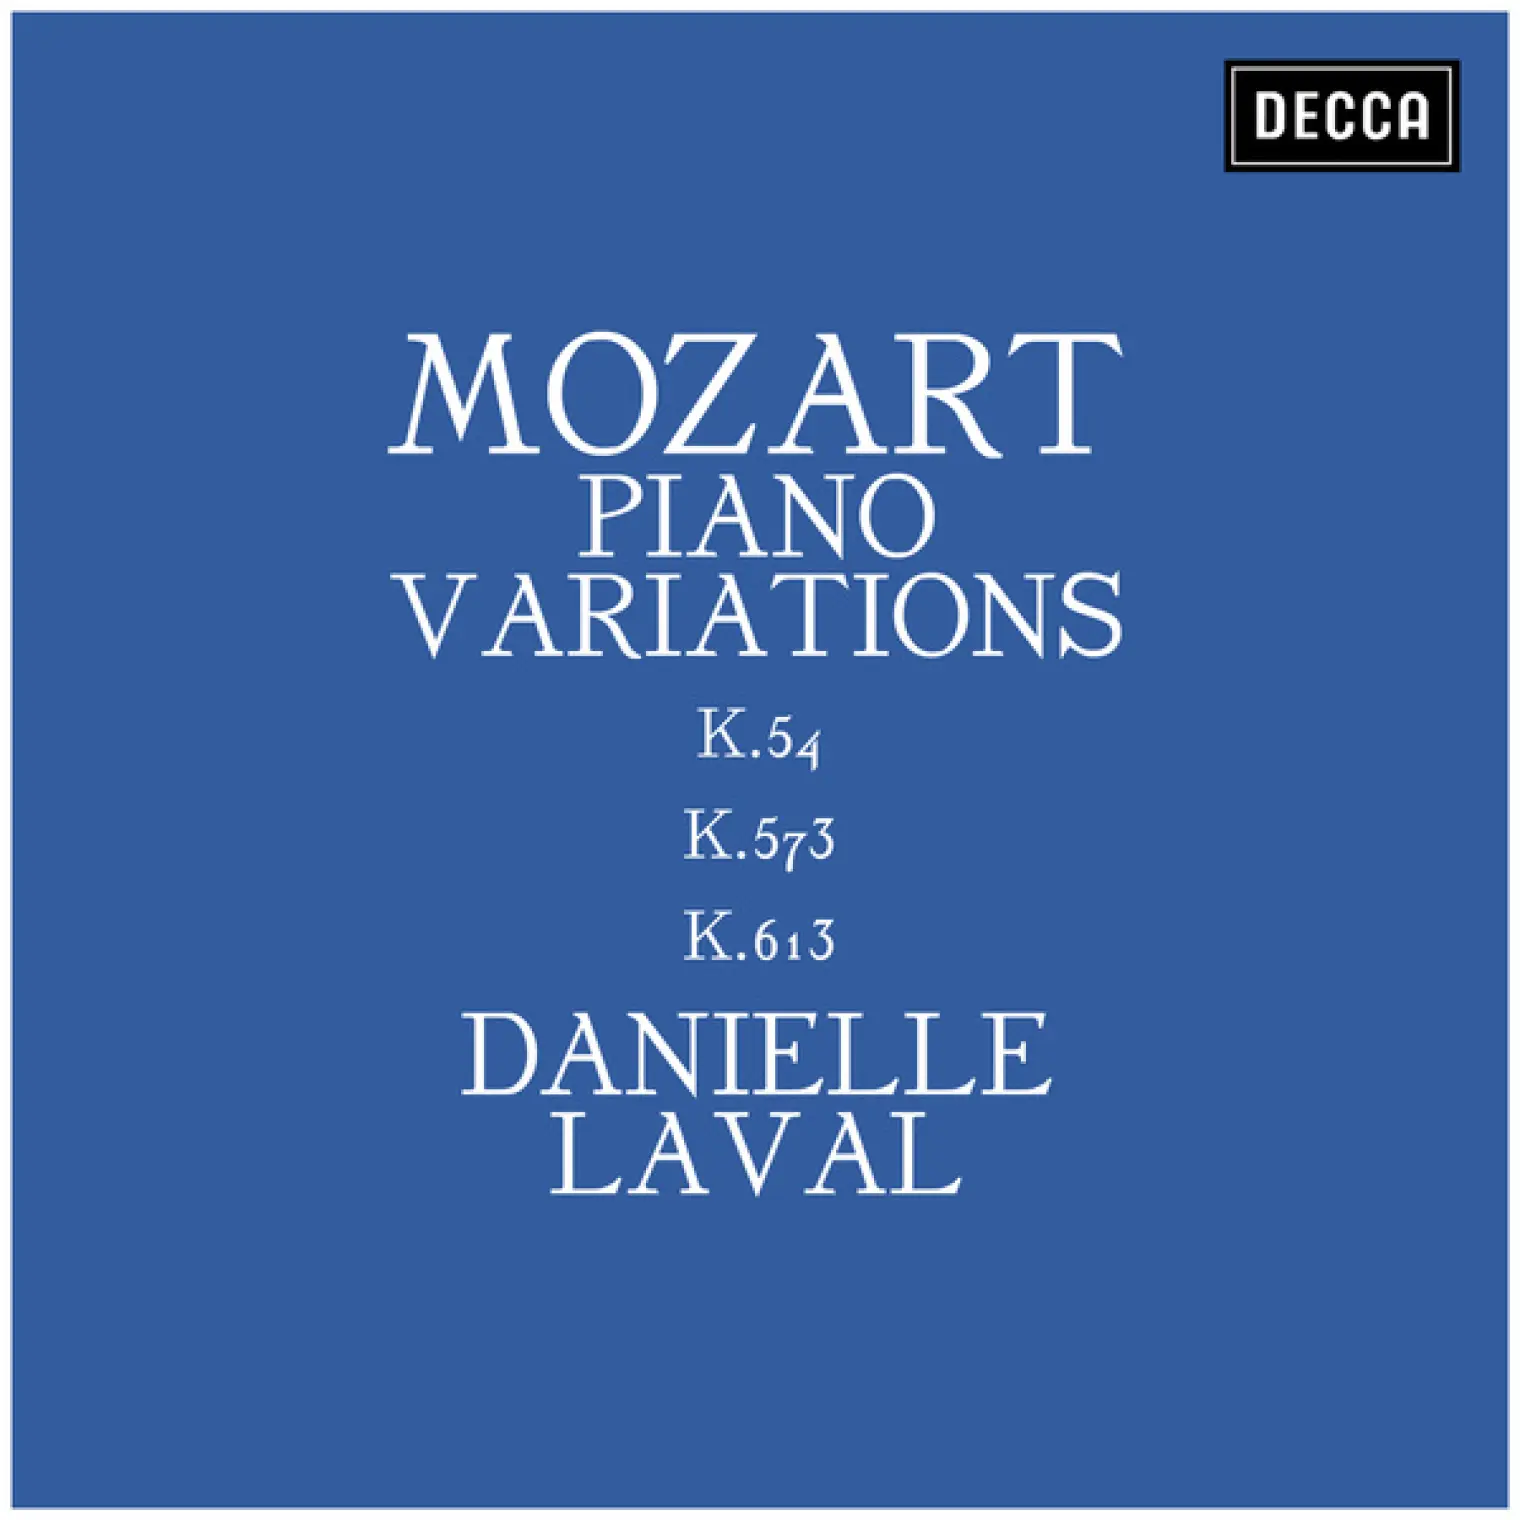 Mozart: Piano Variations K.54, K.573, K.613 -  Danielle Laval 